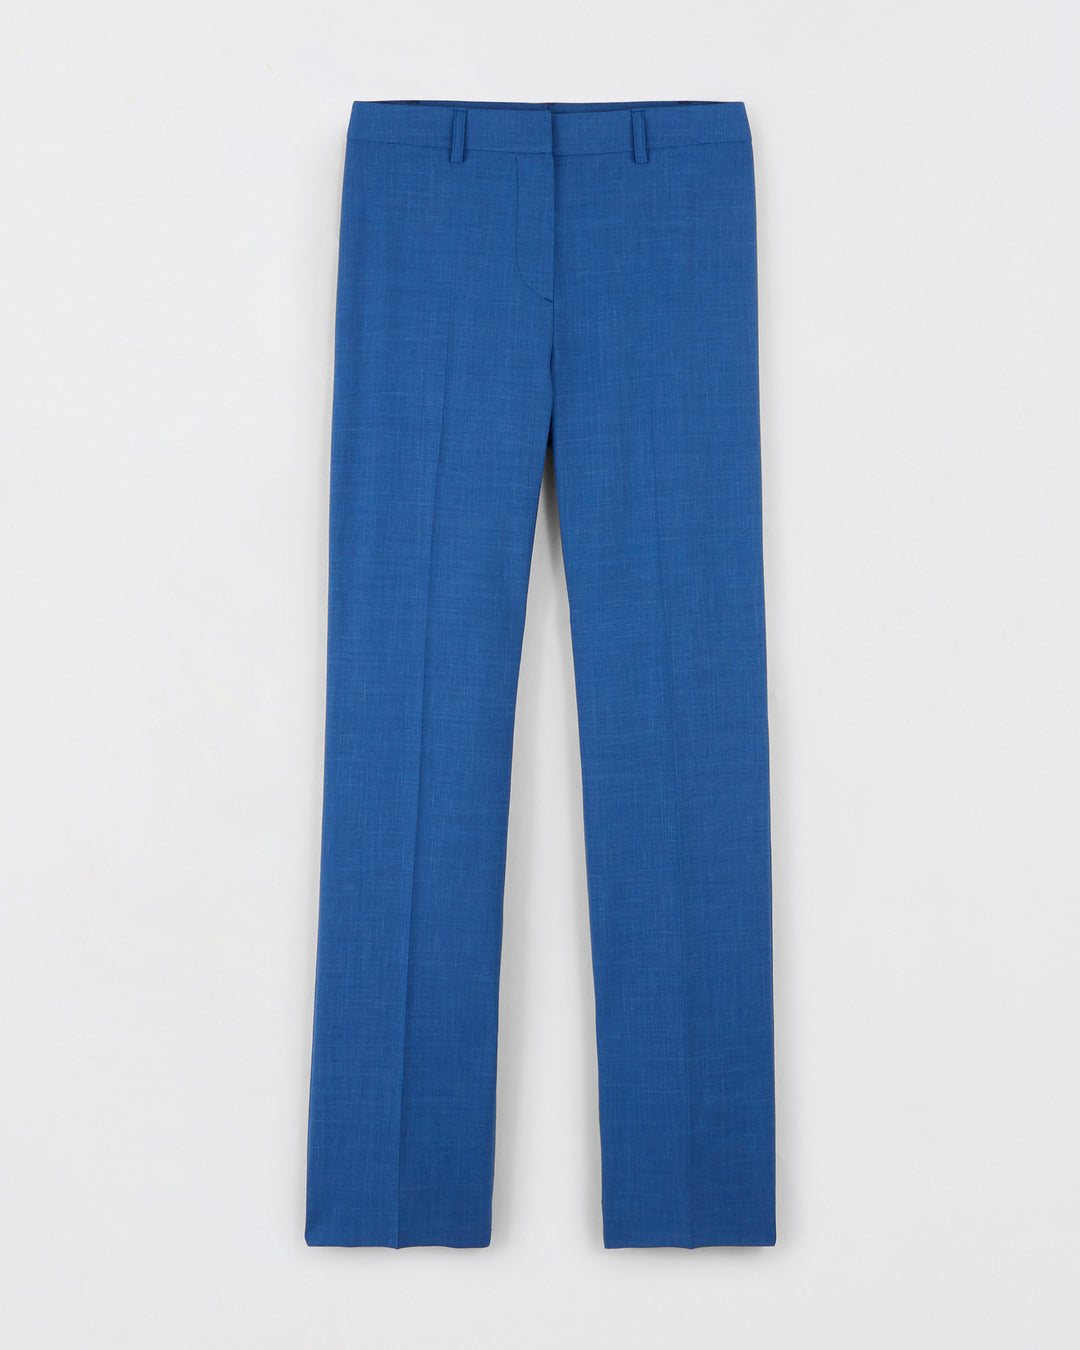 Pantalon tailleur Berlin - Bleu azur